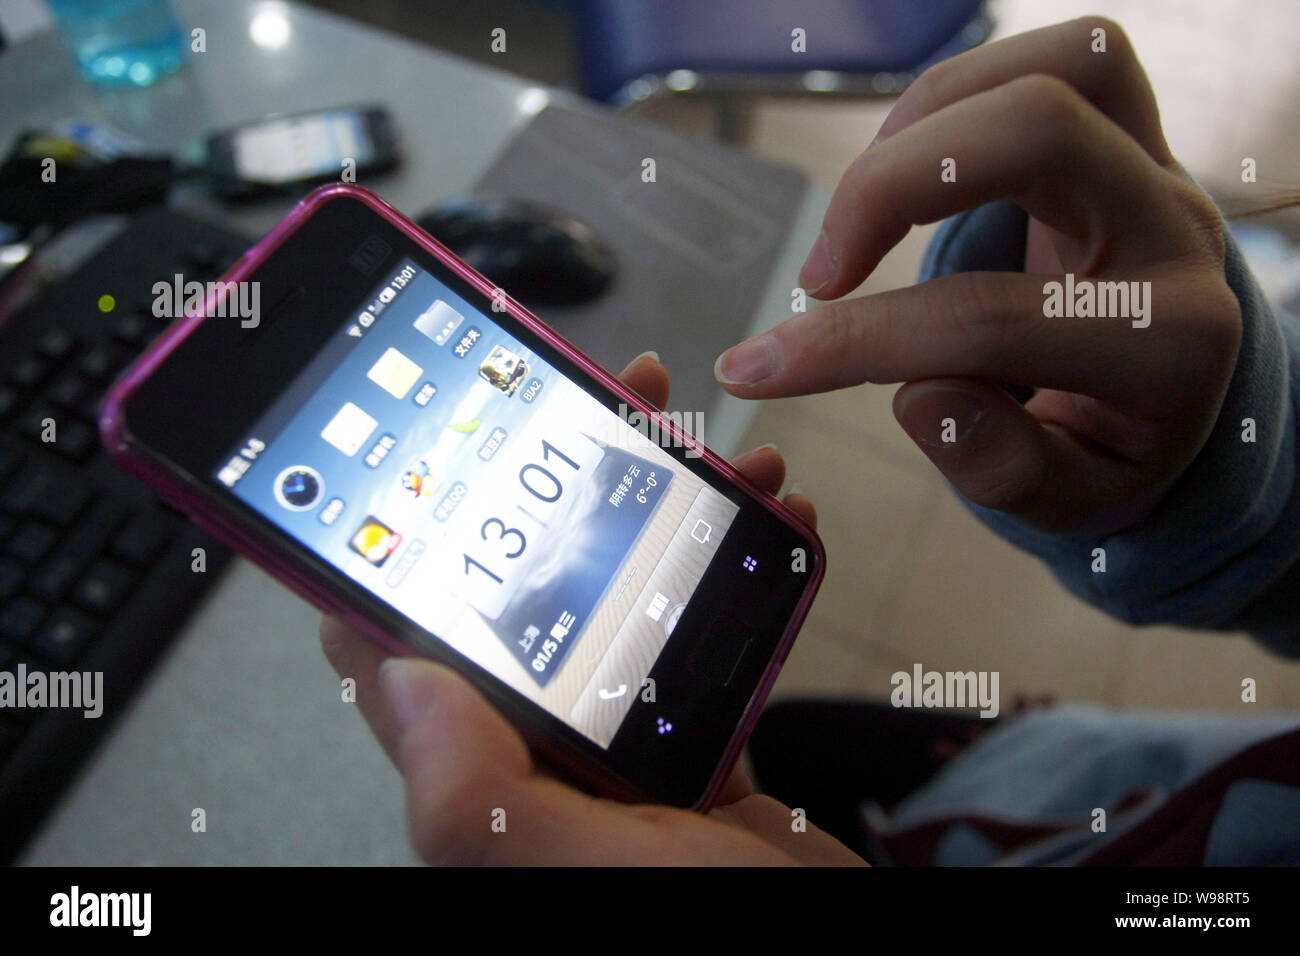 Un cliente cinese tenta di eseguire il Meizu M9 smartphone a un Meizu mobile phone store in Cina a Shanghai, 5 gennaio 2011. La Cina Telecom Industria come Foto Stock